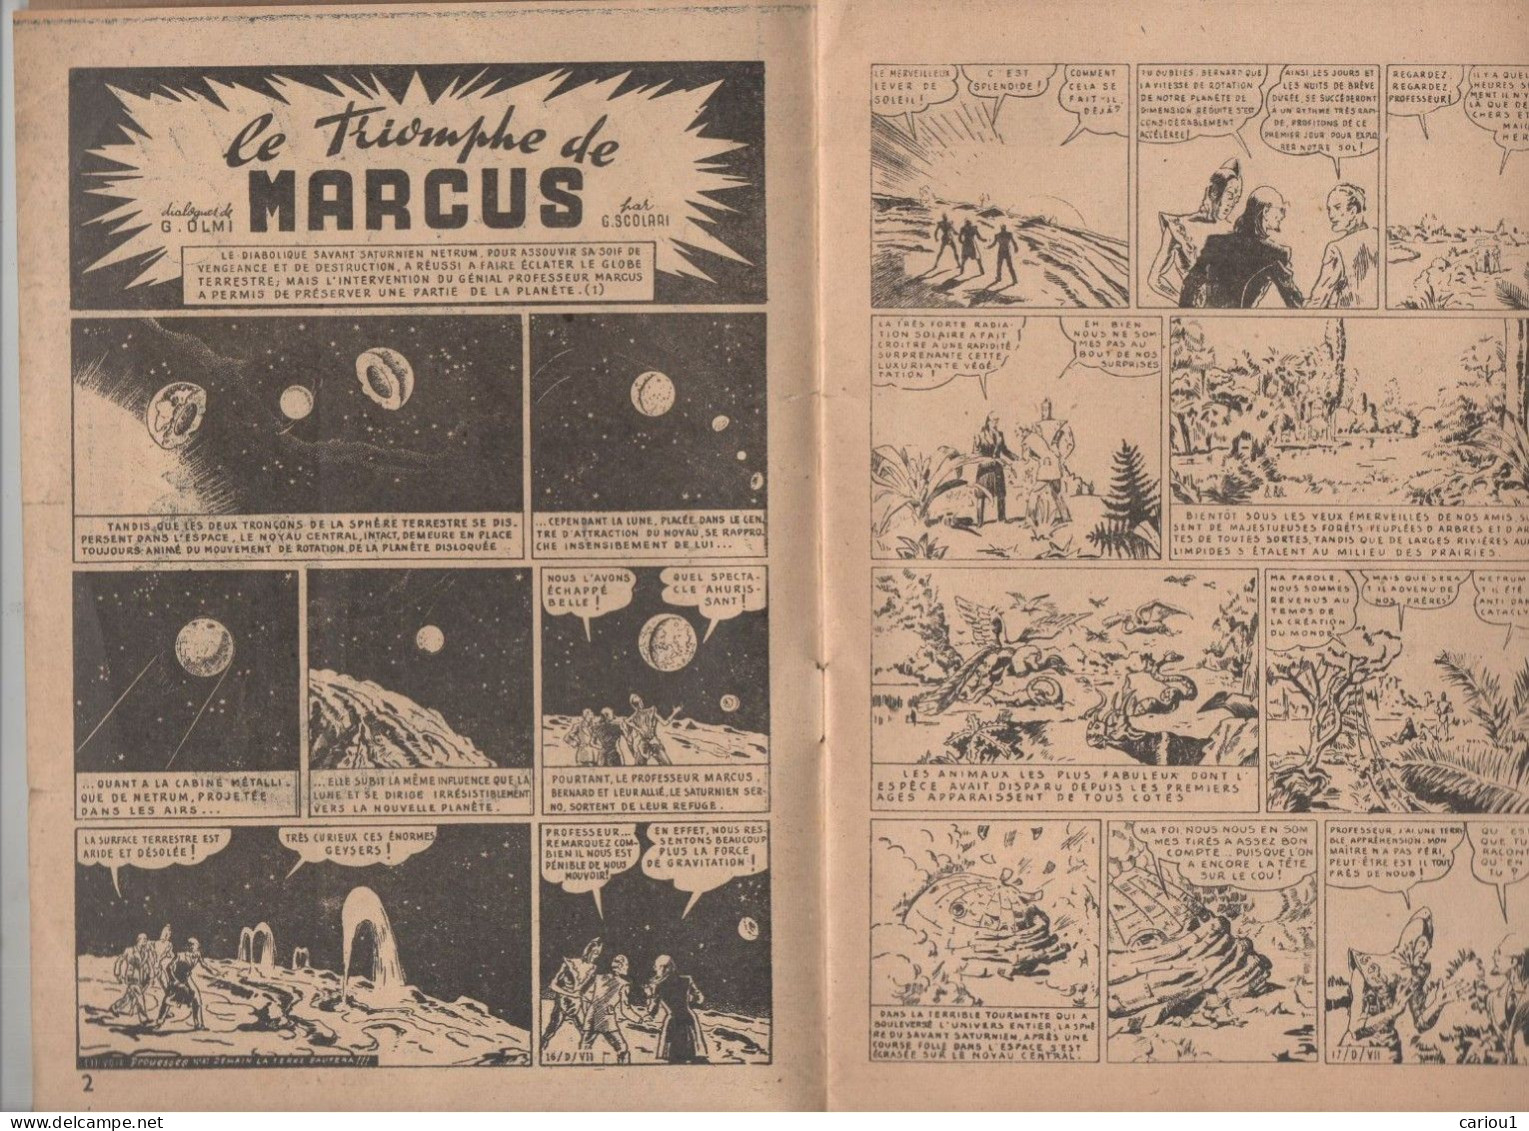 C1 SCOLARI Triomphe Marcus SELECTIONS PROUESSES # 2 1948 Saturne Contre Terre SF Port Inclus France - Avant 1950